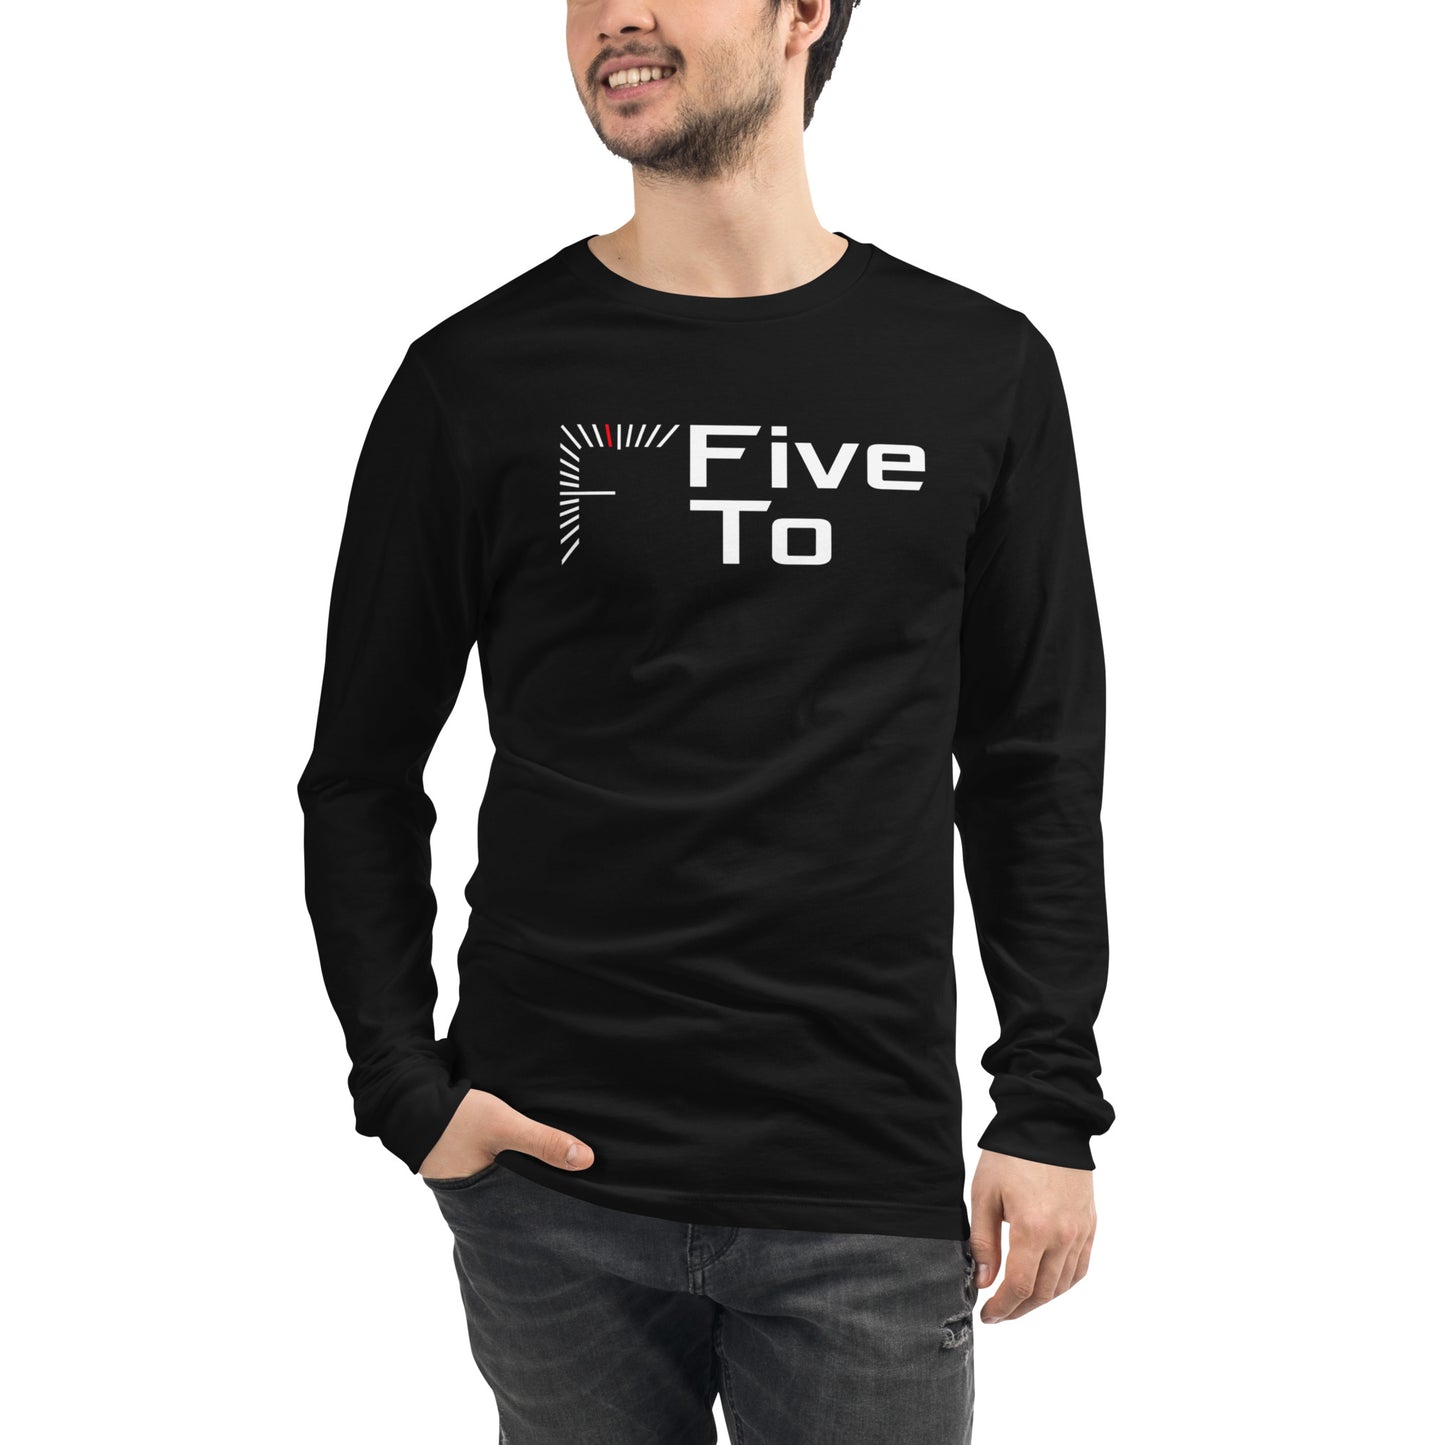 FiveTo Unisex Long Sleeve T-shirt